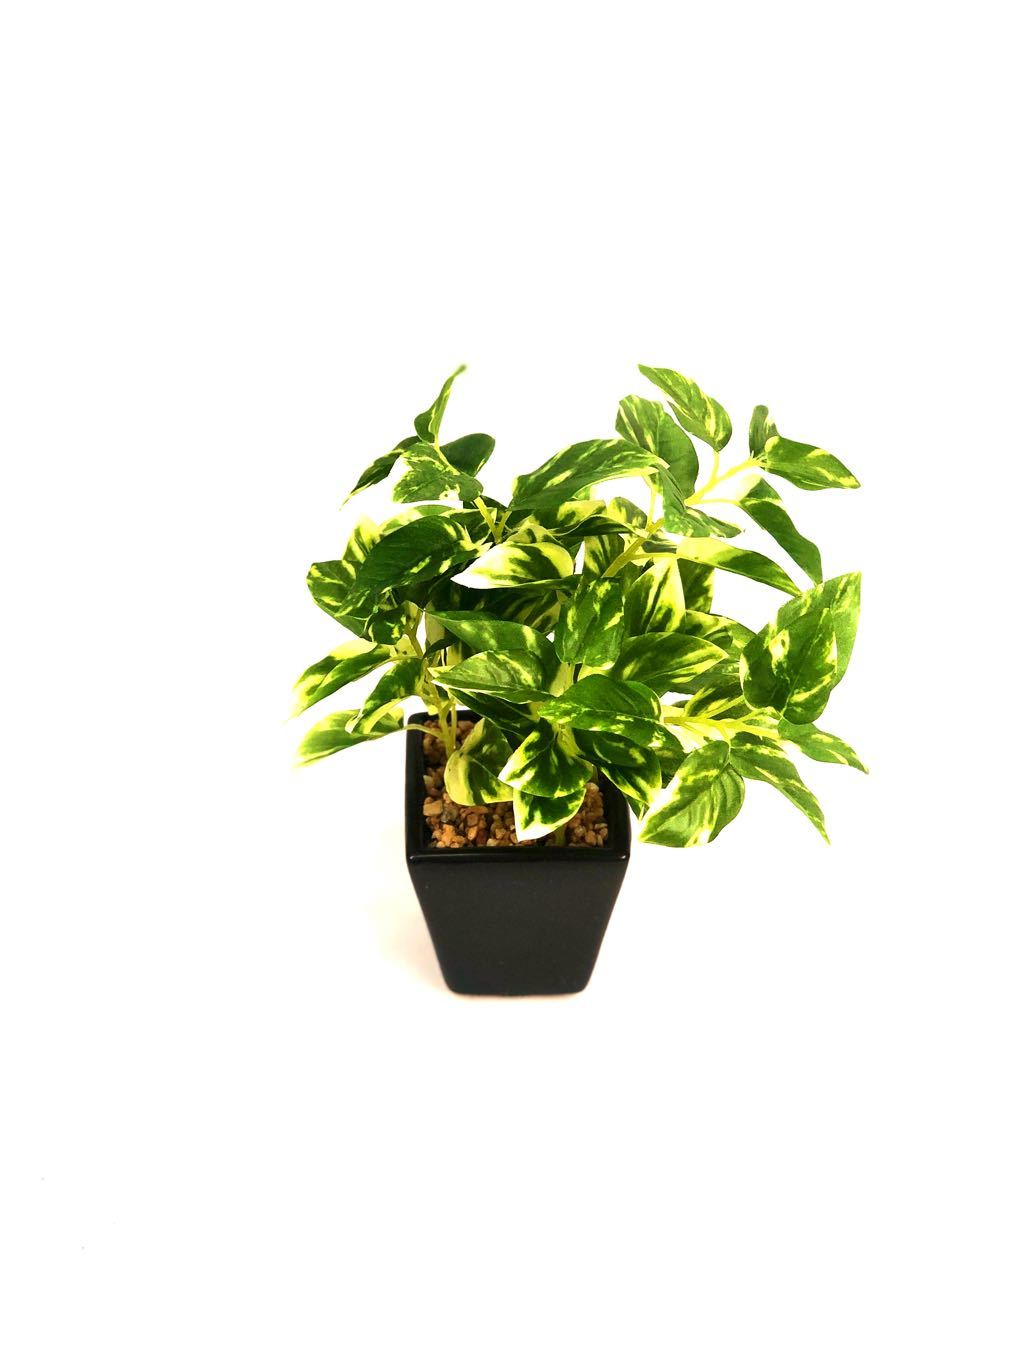 Sweet Little Indoor Plants Household Devil's Ivy Artificial Range Tamrapatra